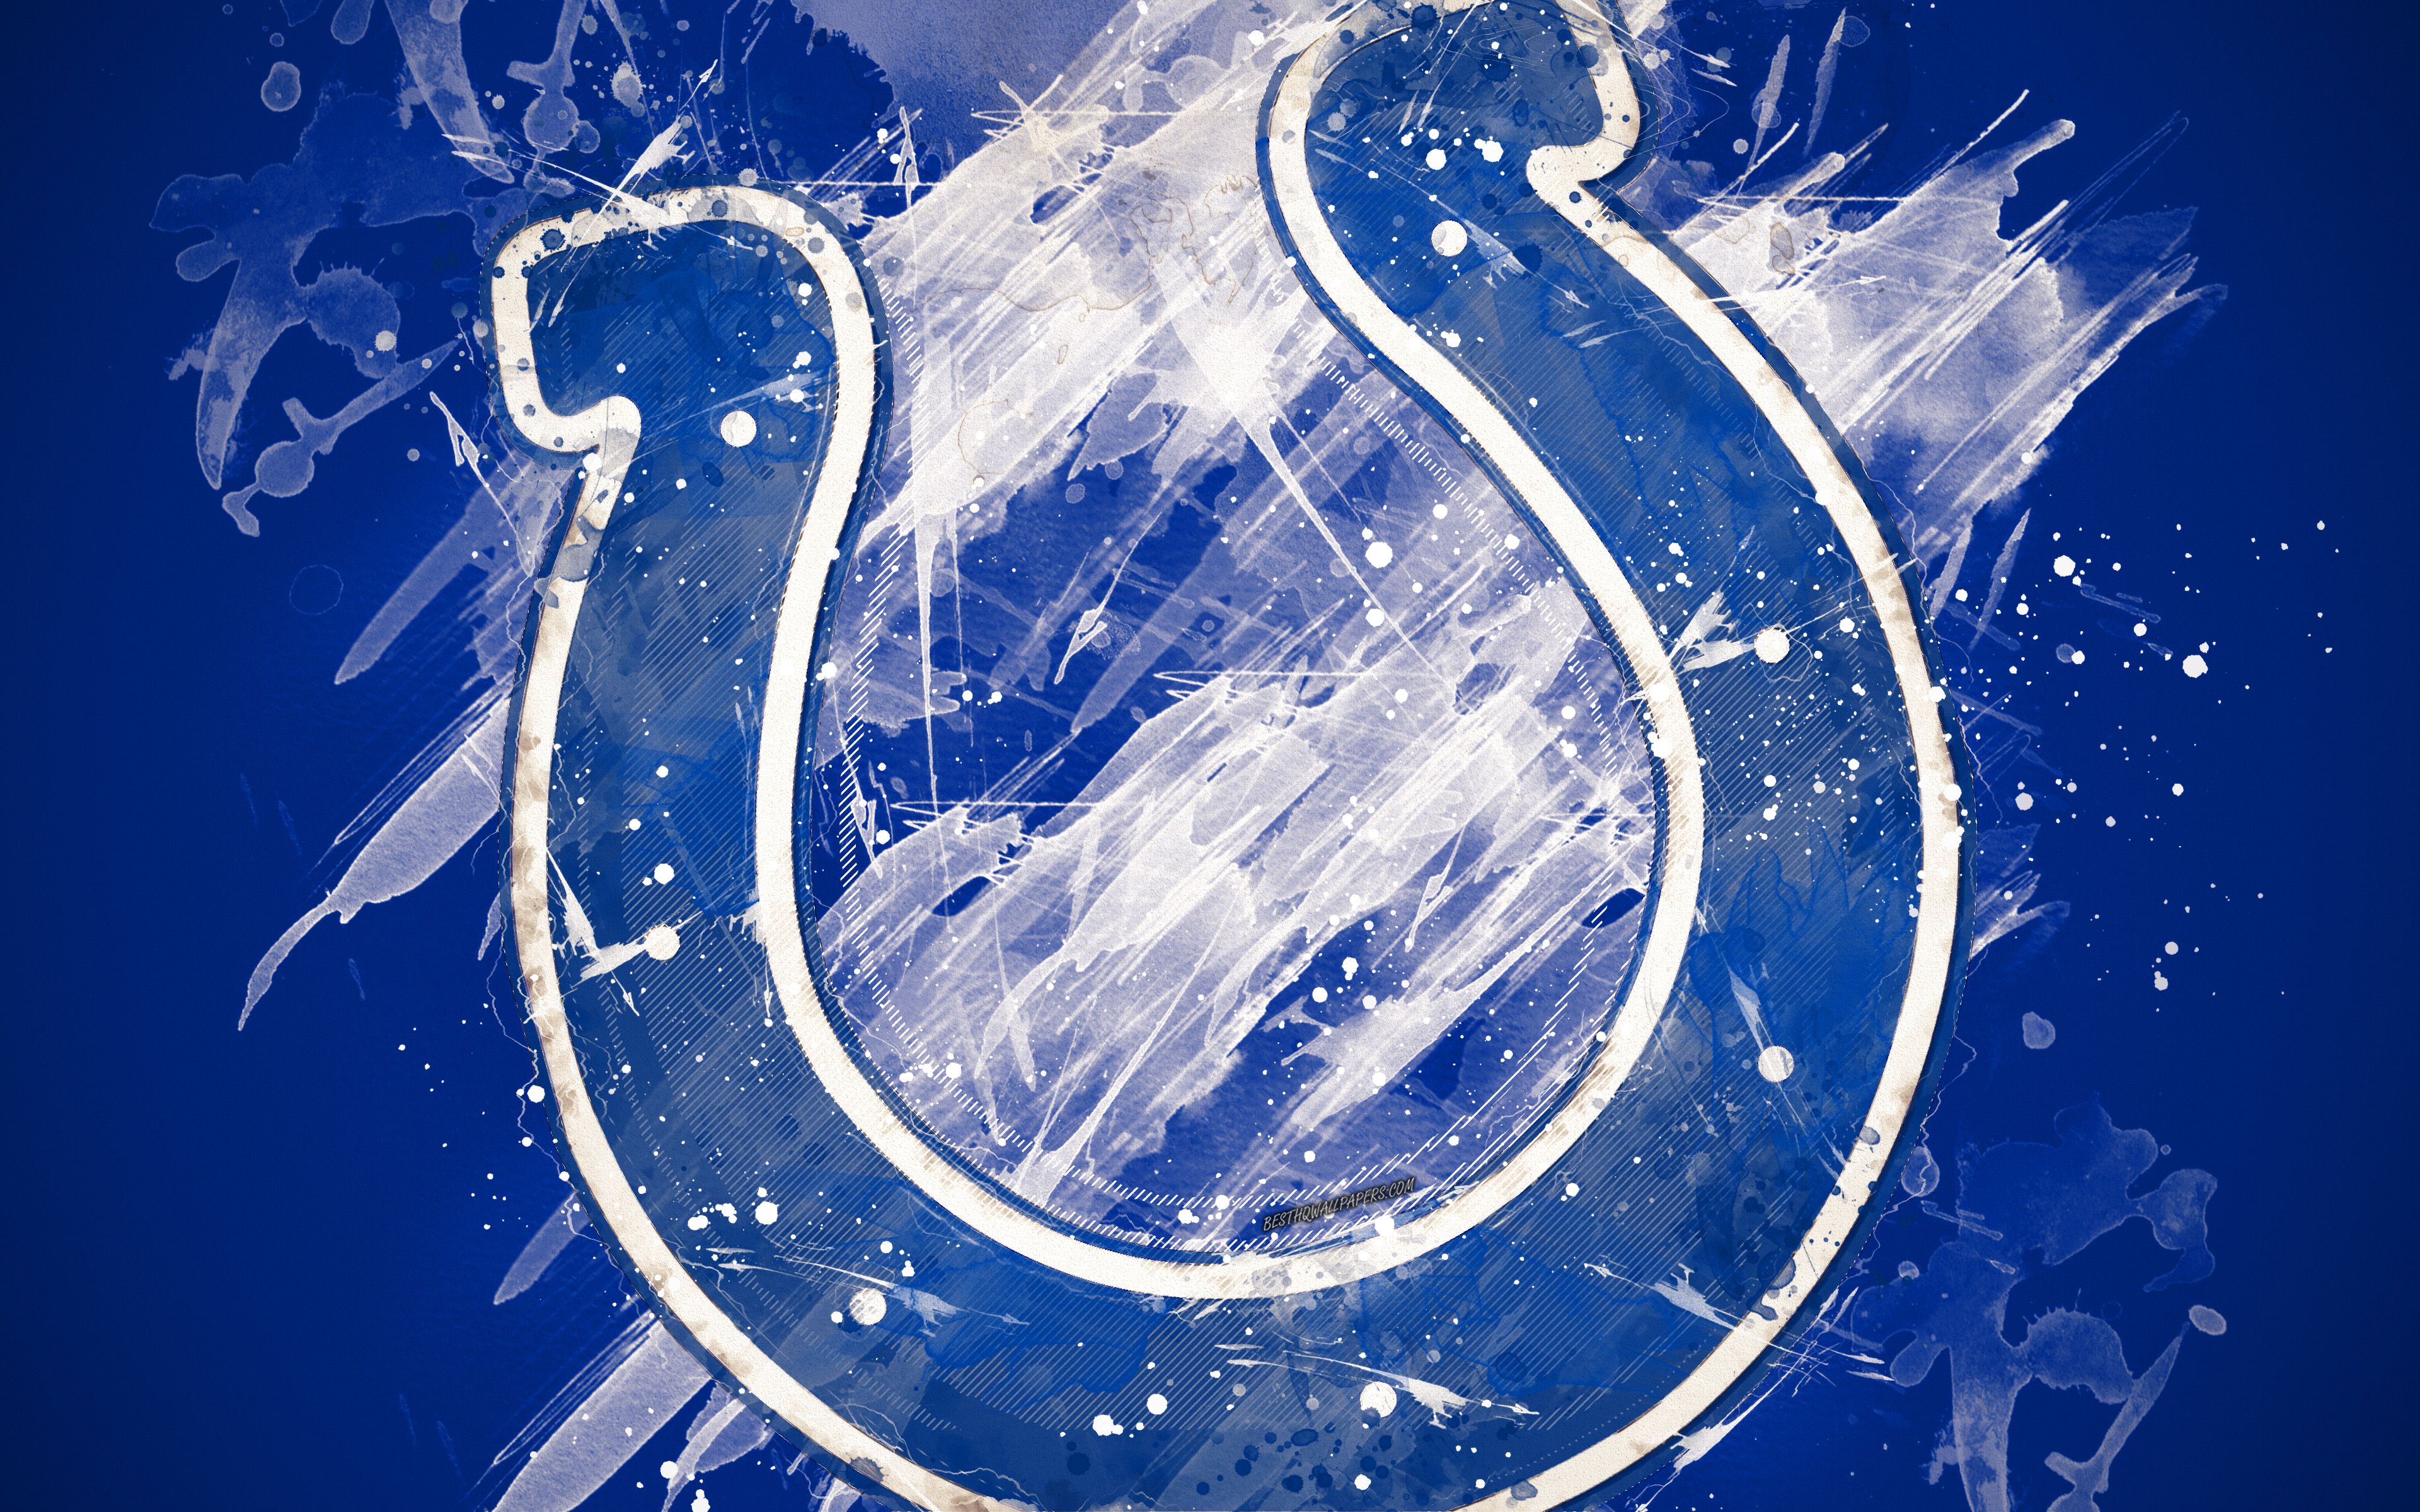 Download wallpaper Indianapolis Colts, 4k, logo, grunge art